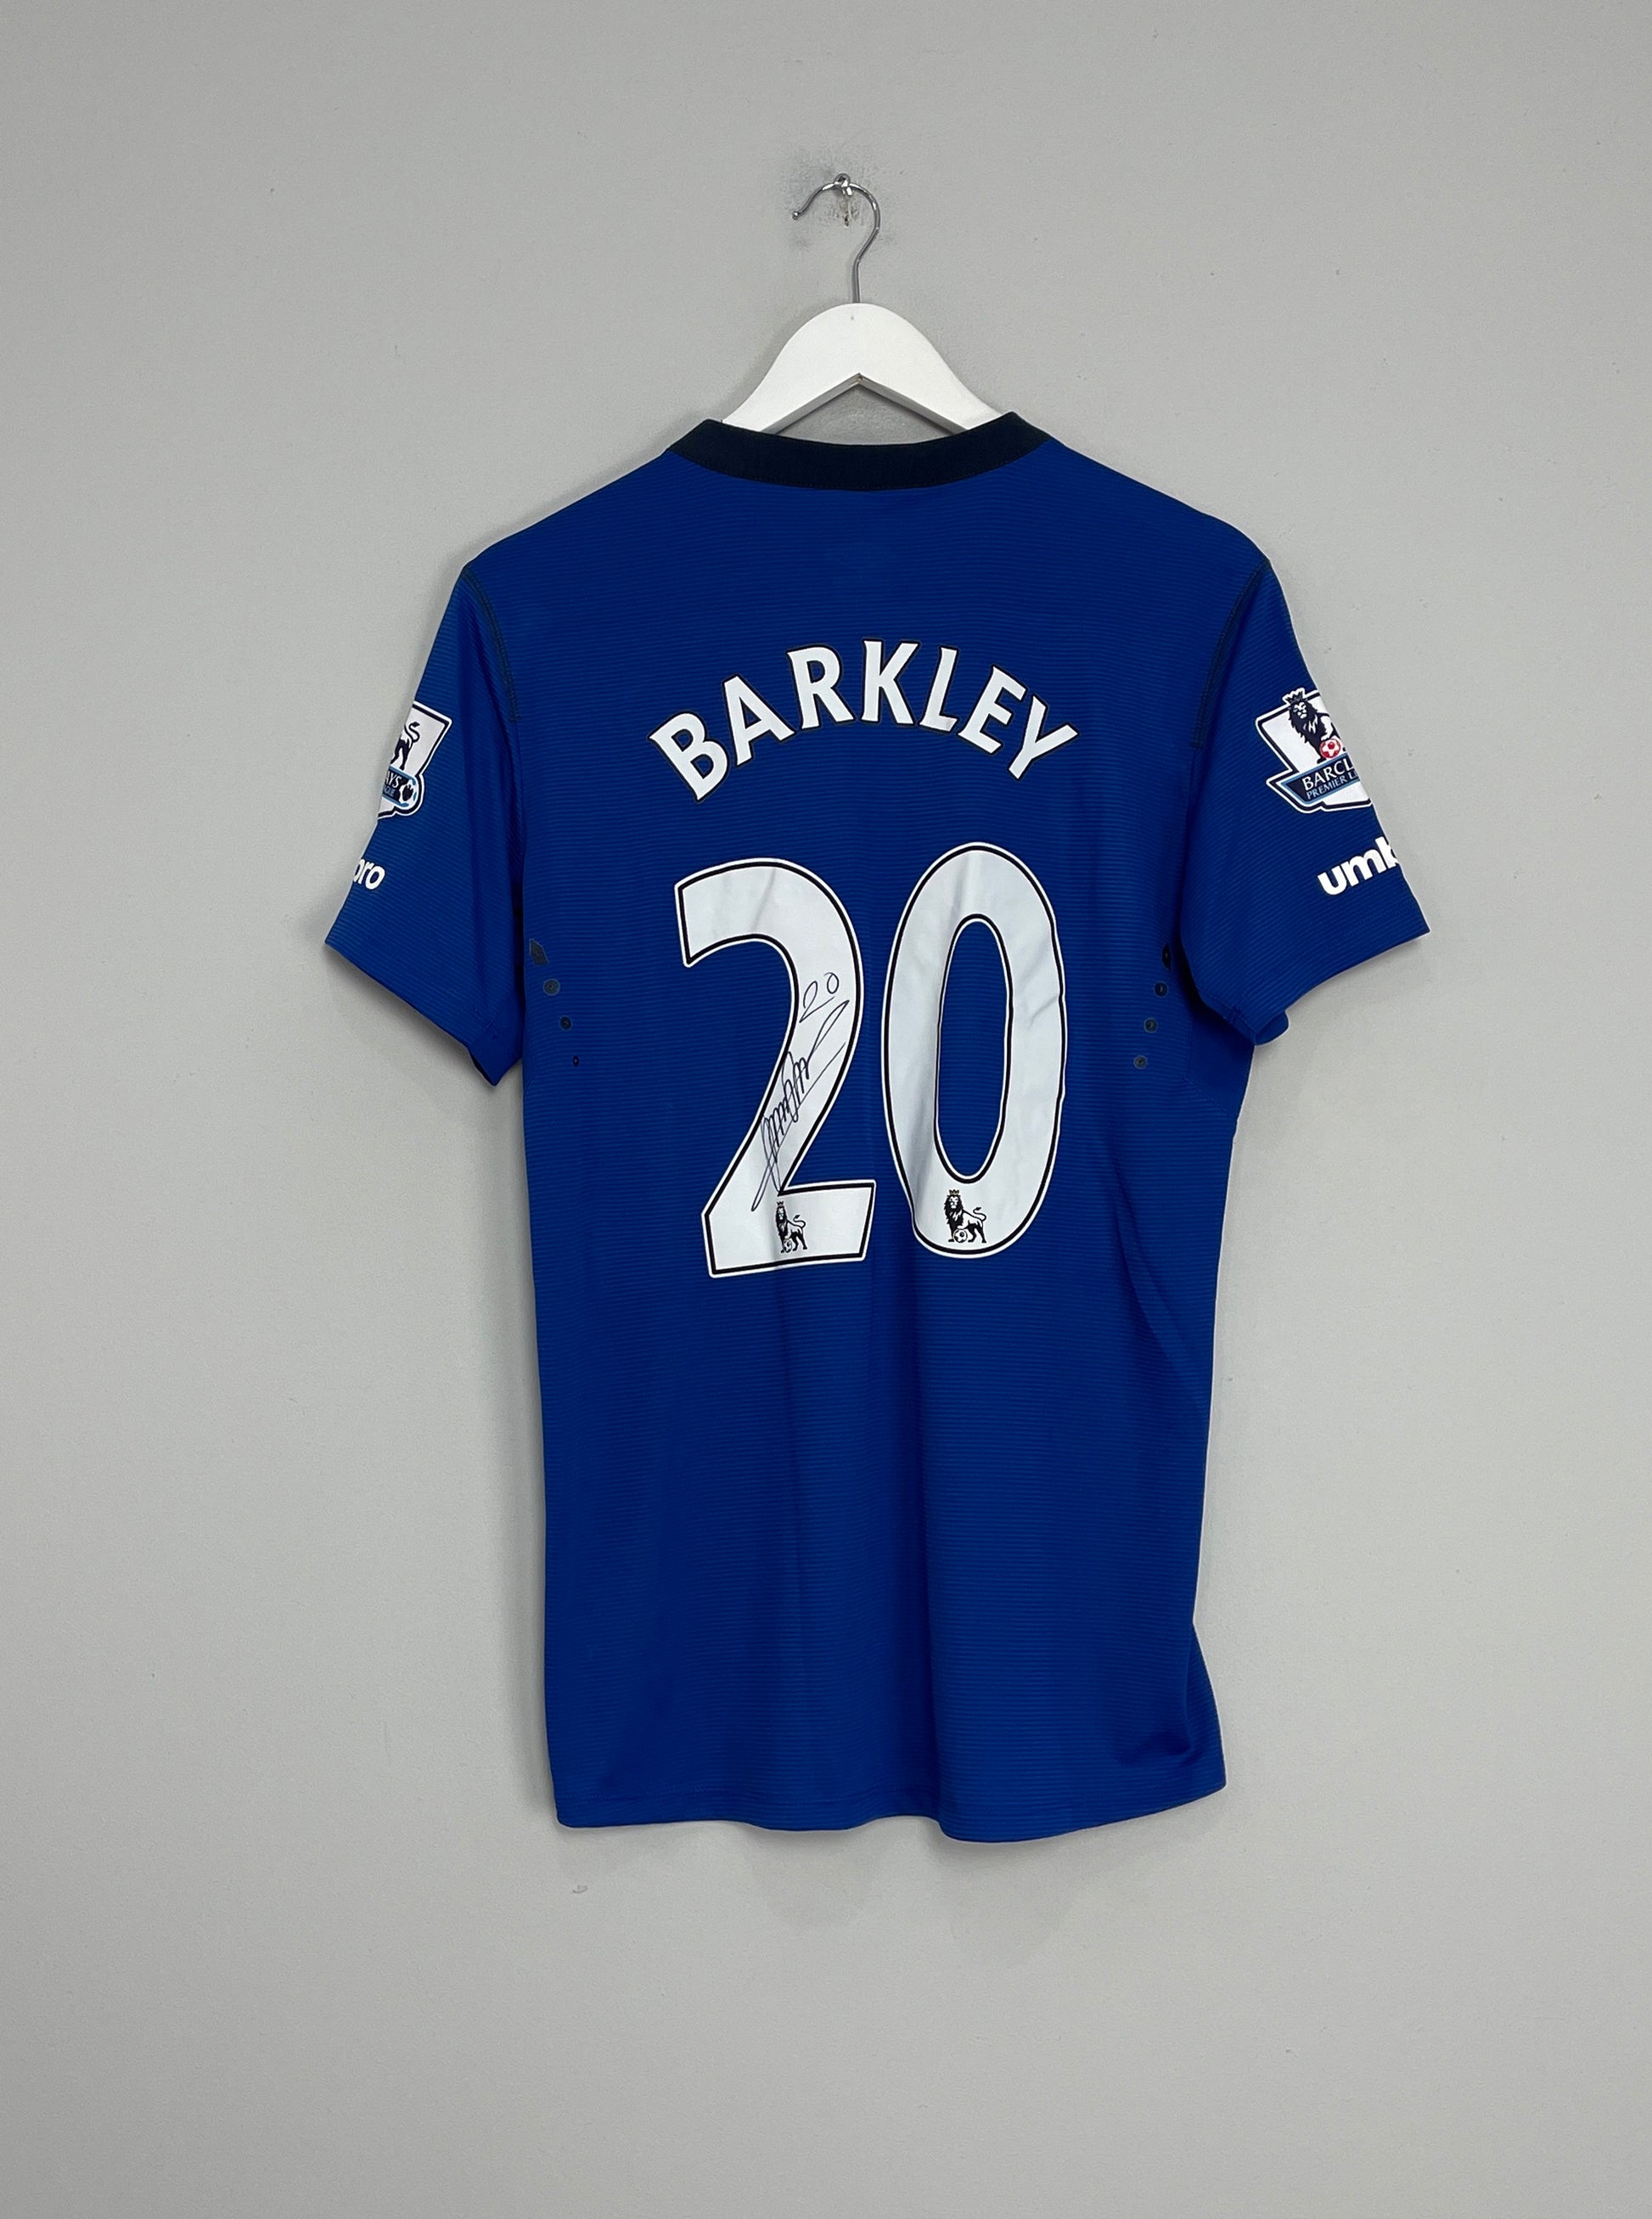 Image of the Everton Barkley shirt from the 2014/15 season